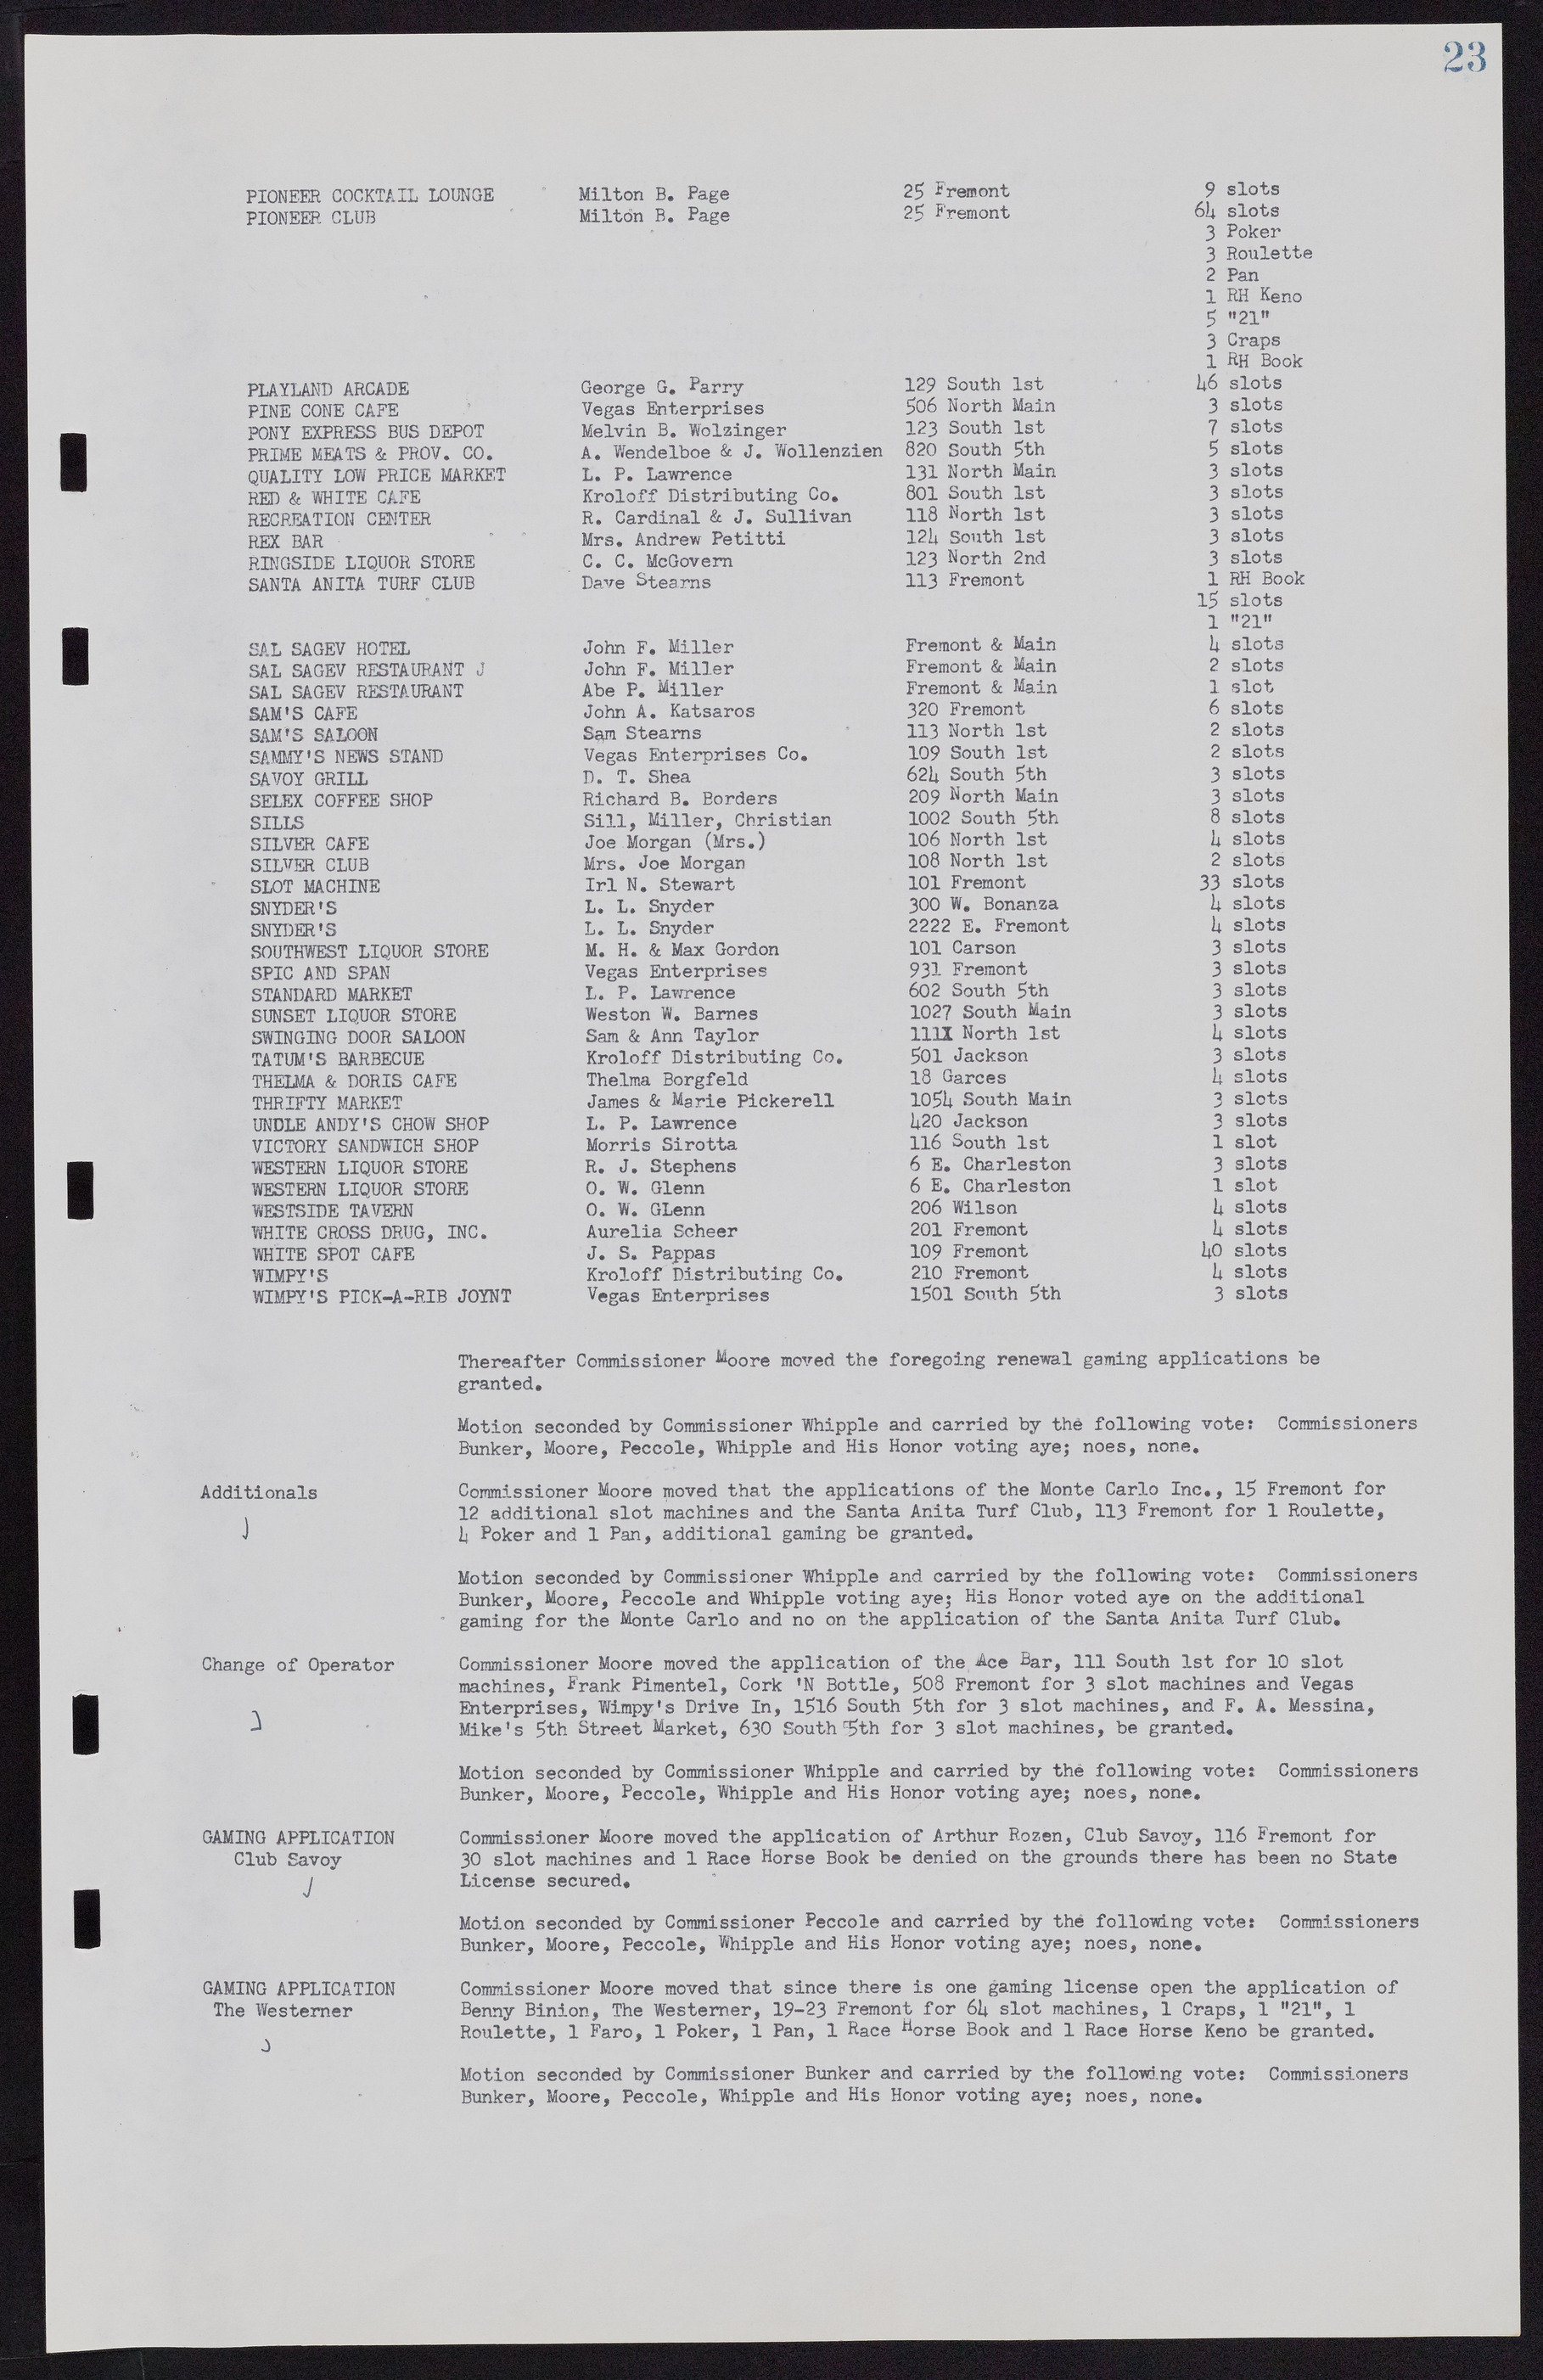 Las Vegas City Commission Minutes, November 7, 1949 to May 21, 1952, lvc000007-29